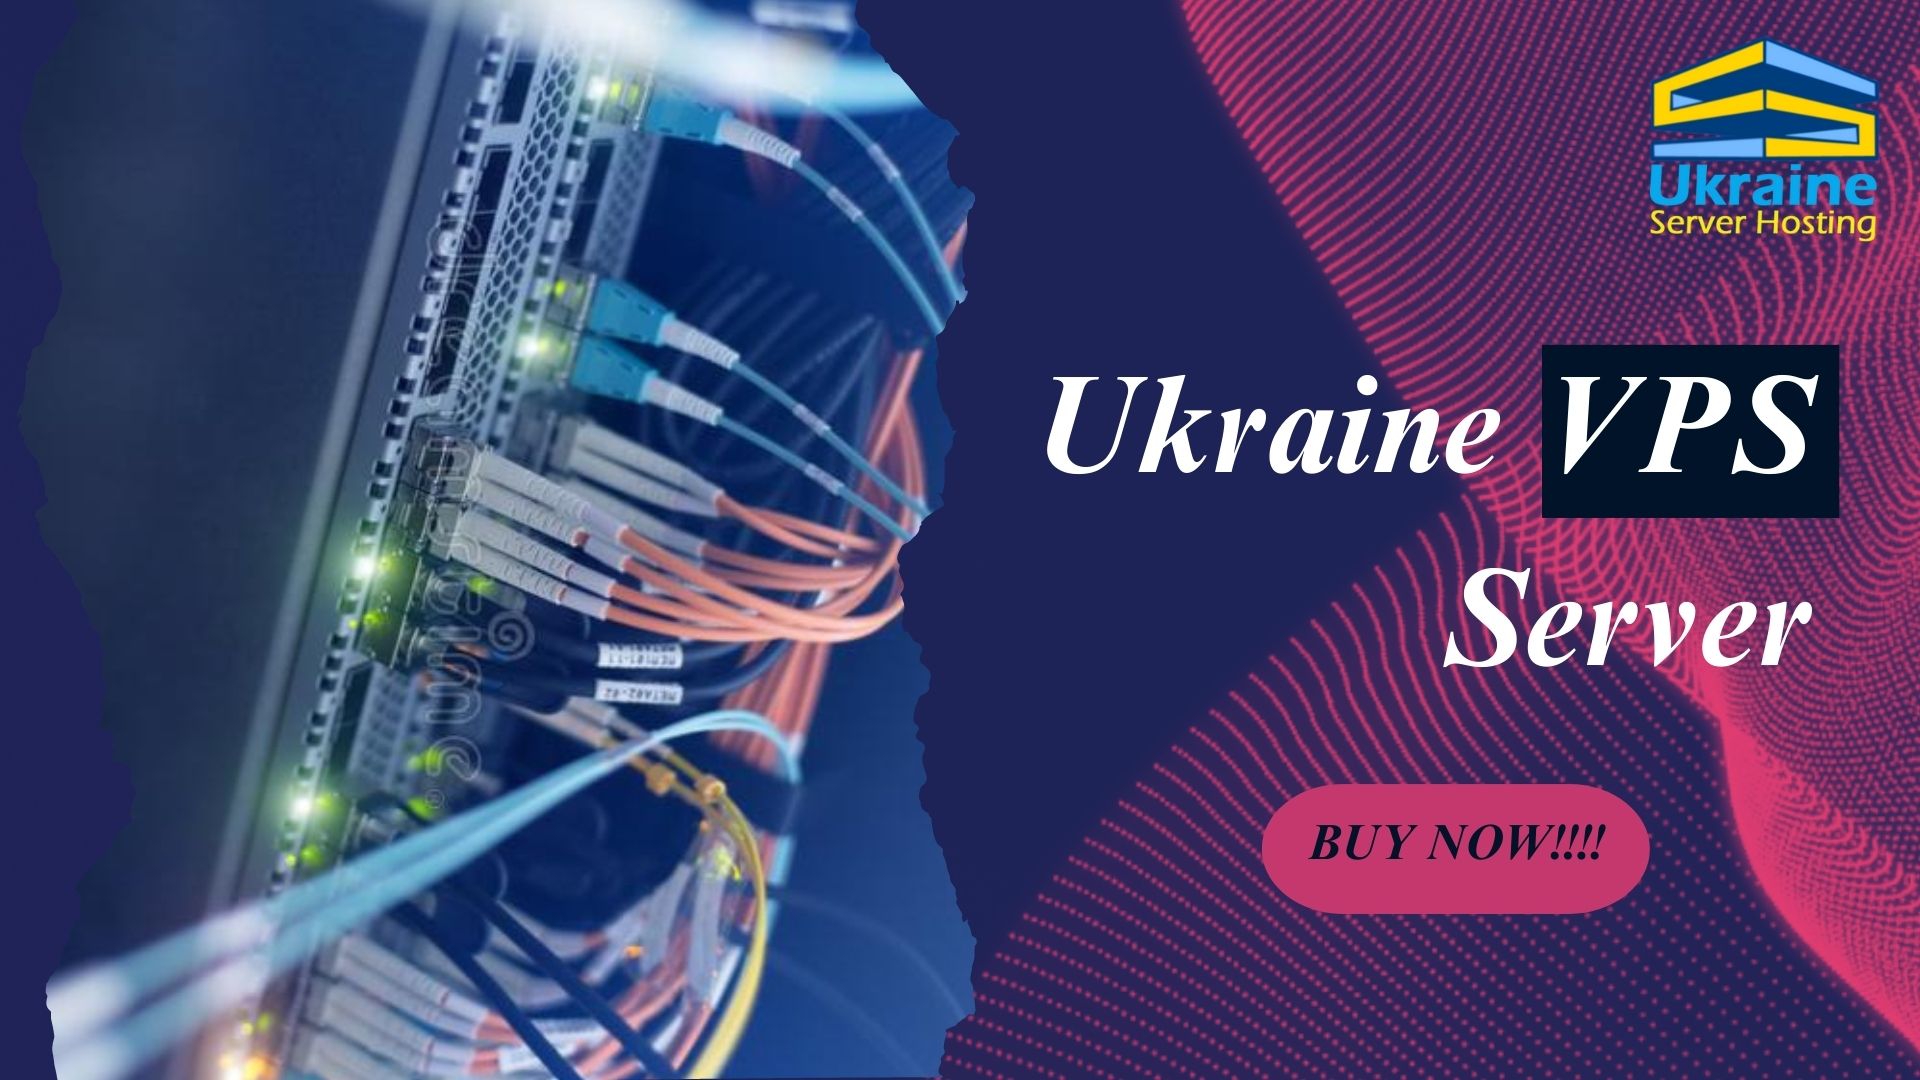 Ukraine VPS Server